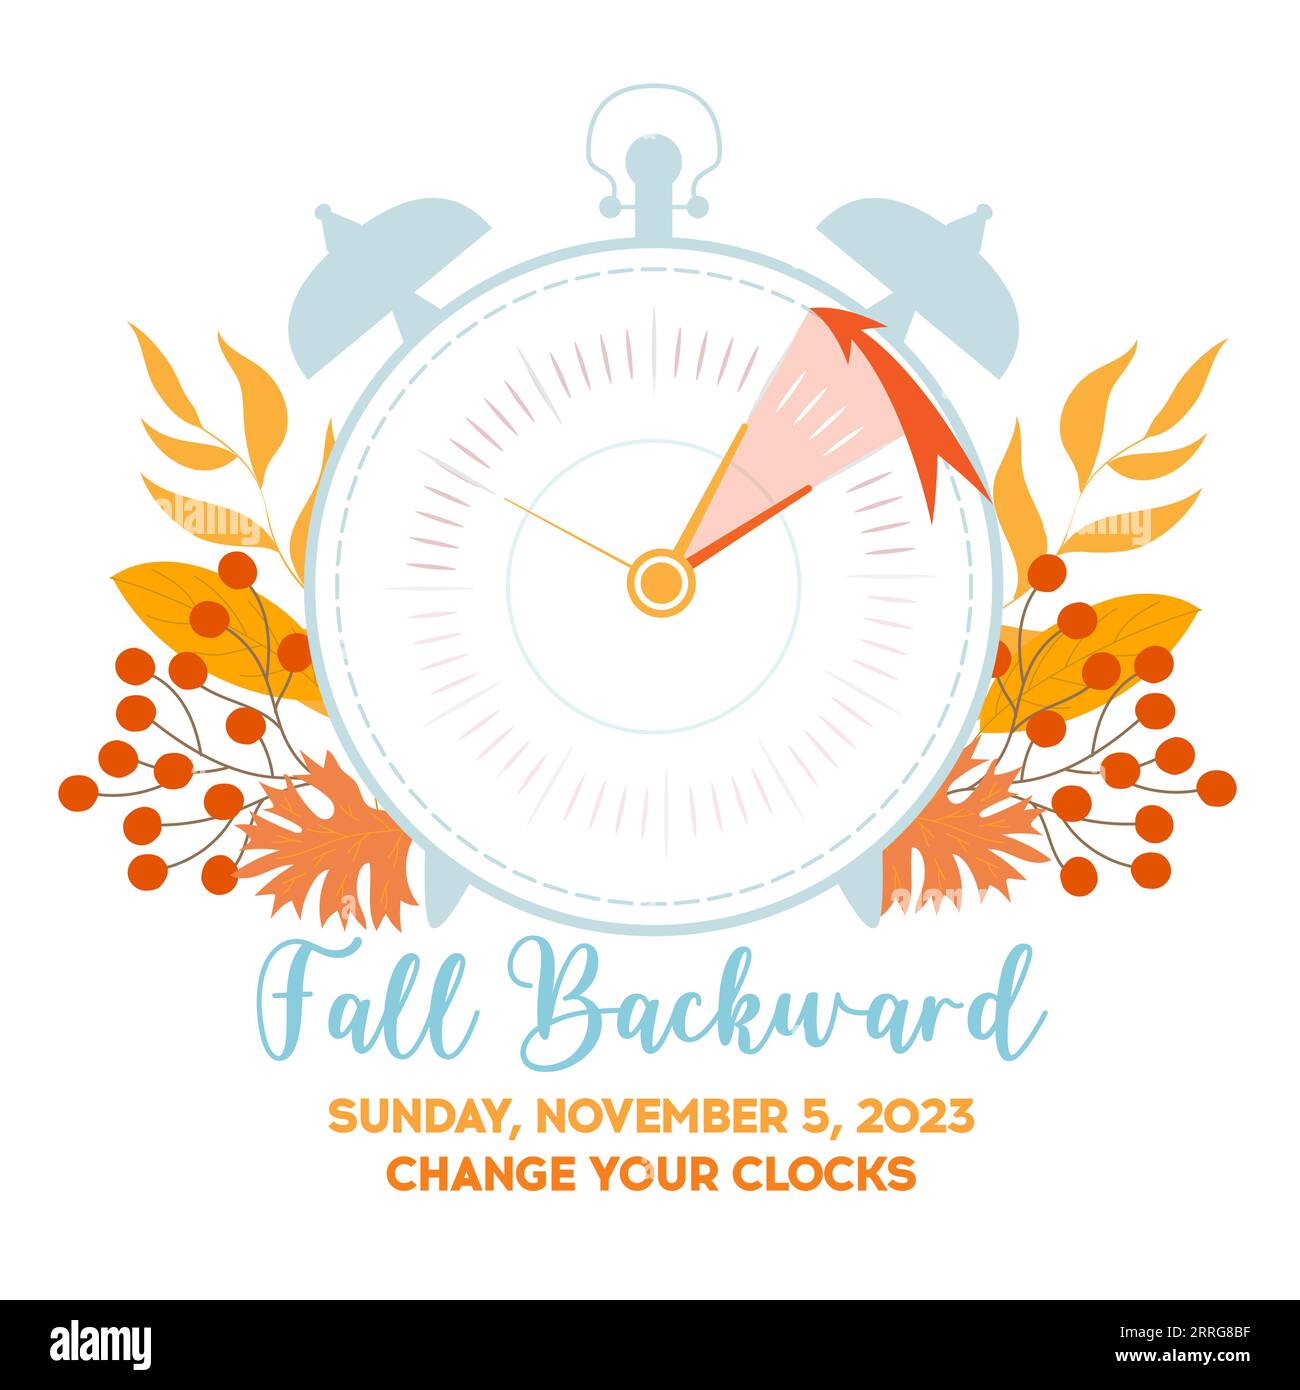 Reminder: Set Your Clocks Back One Hour on Sunday, November 7